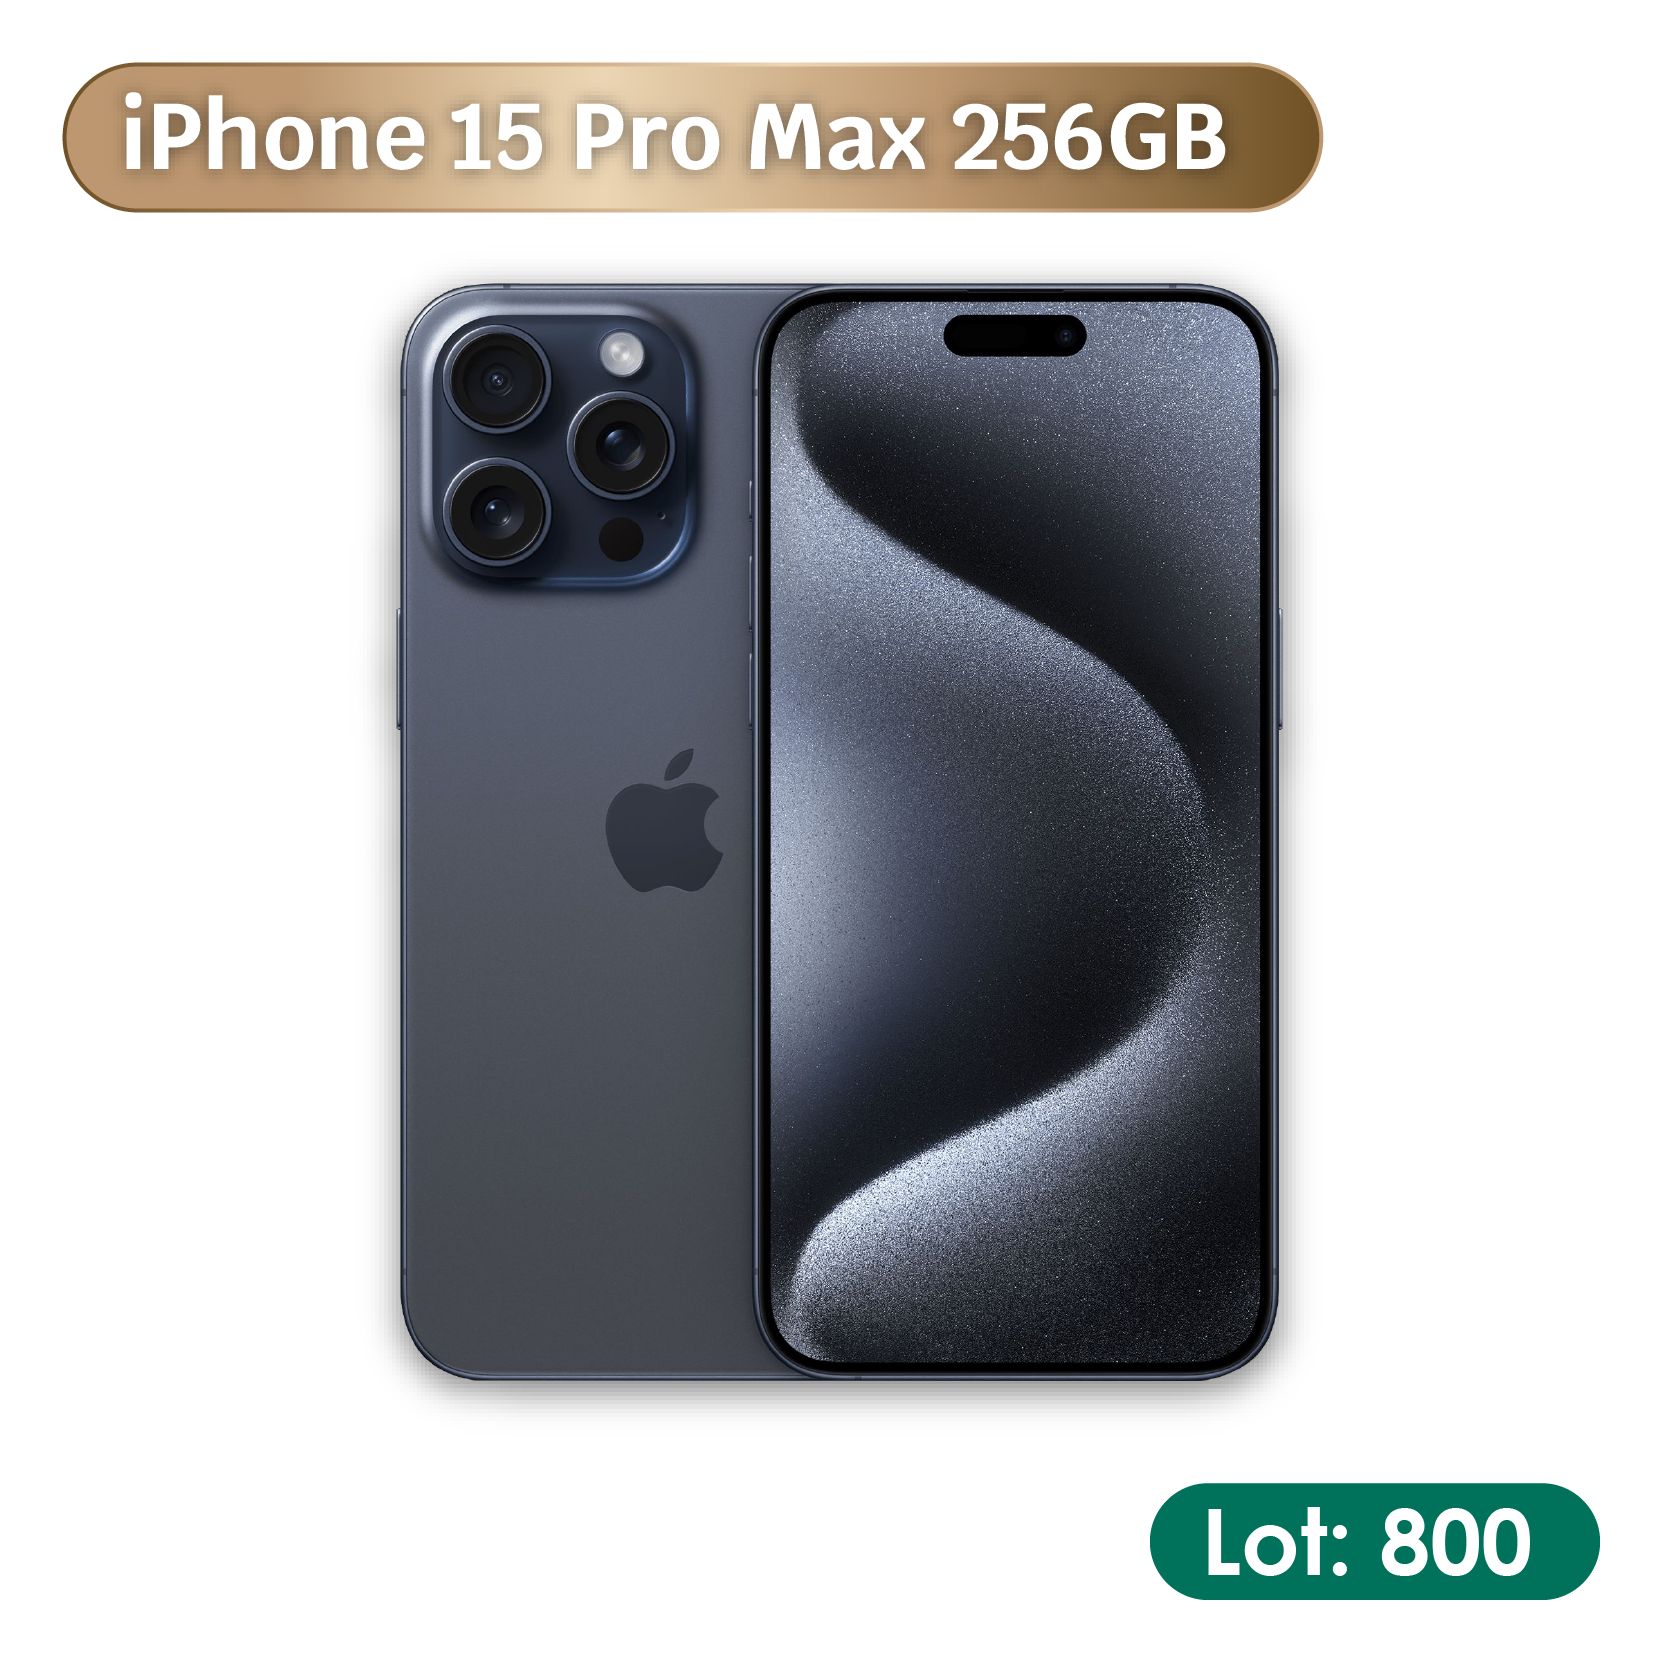 5. iPhone 15 Pro Max 256GB | Lot: 800